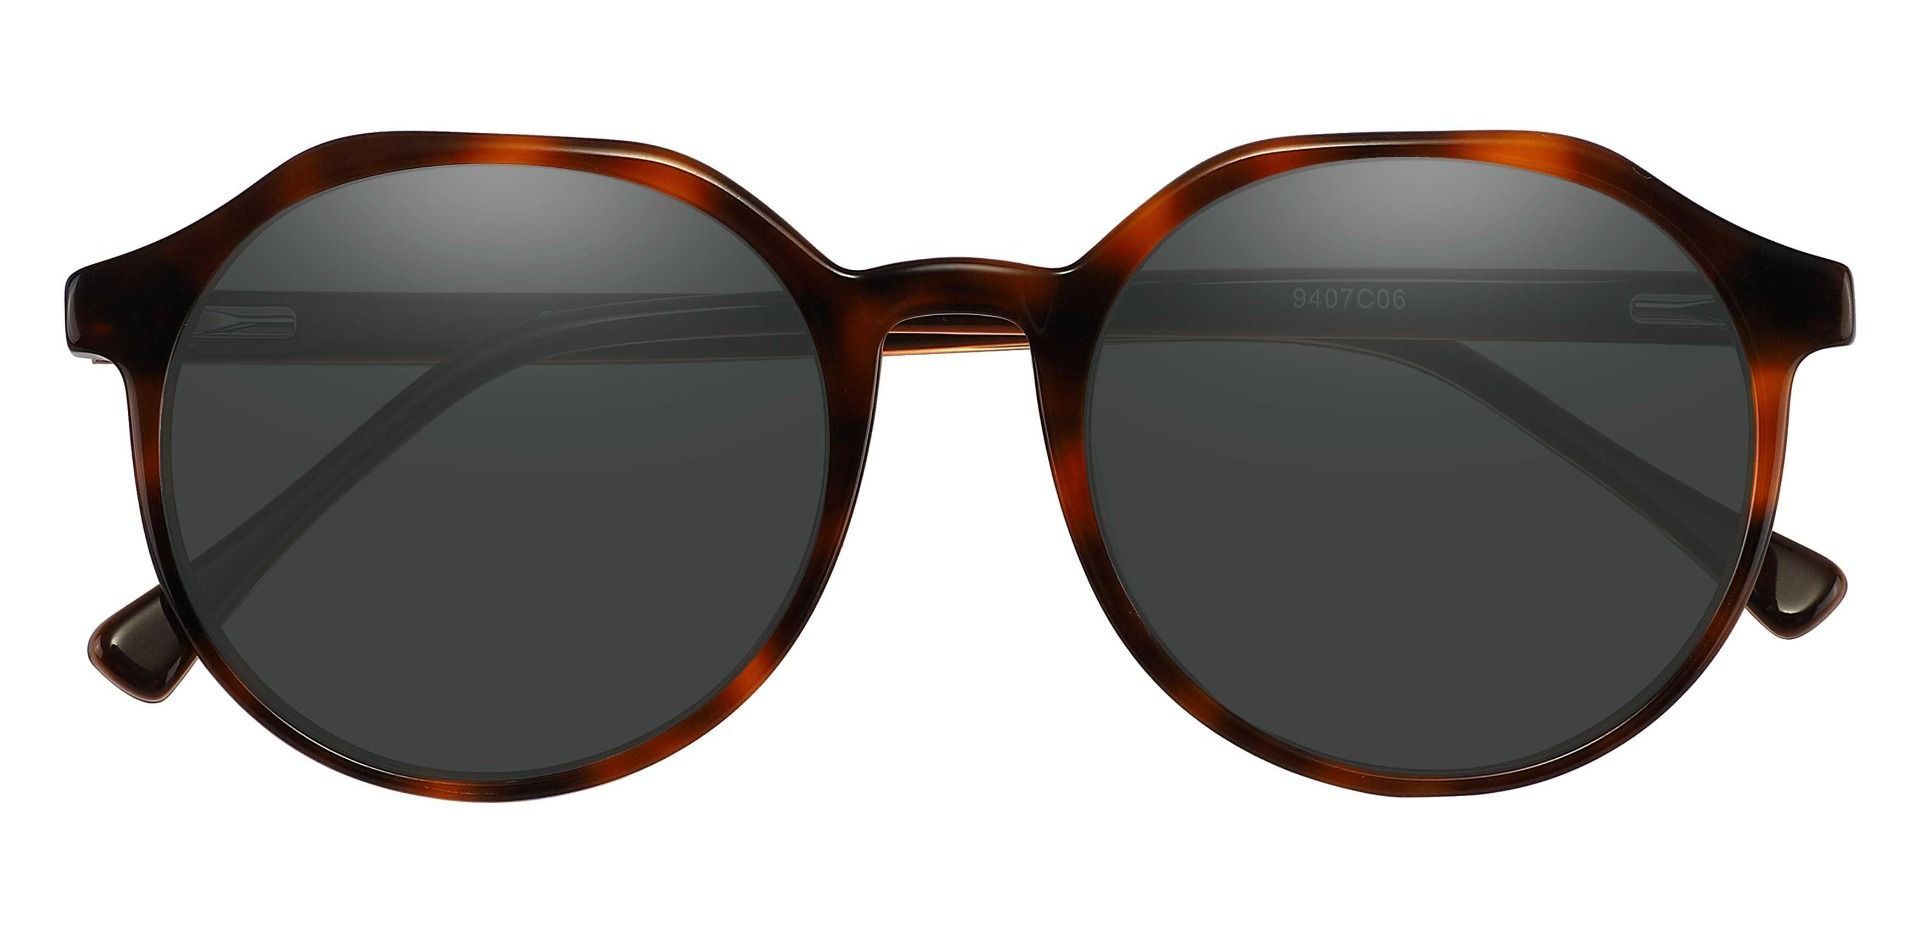 Tucker Geometric Non-Rx Sunglasses - Tortoise Frame With Gray Lenses